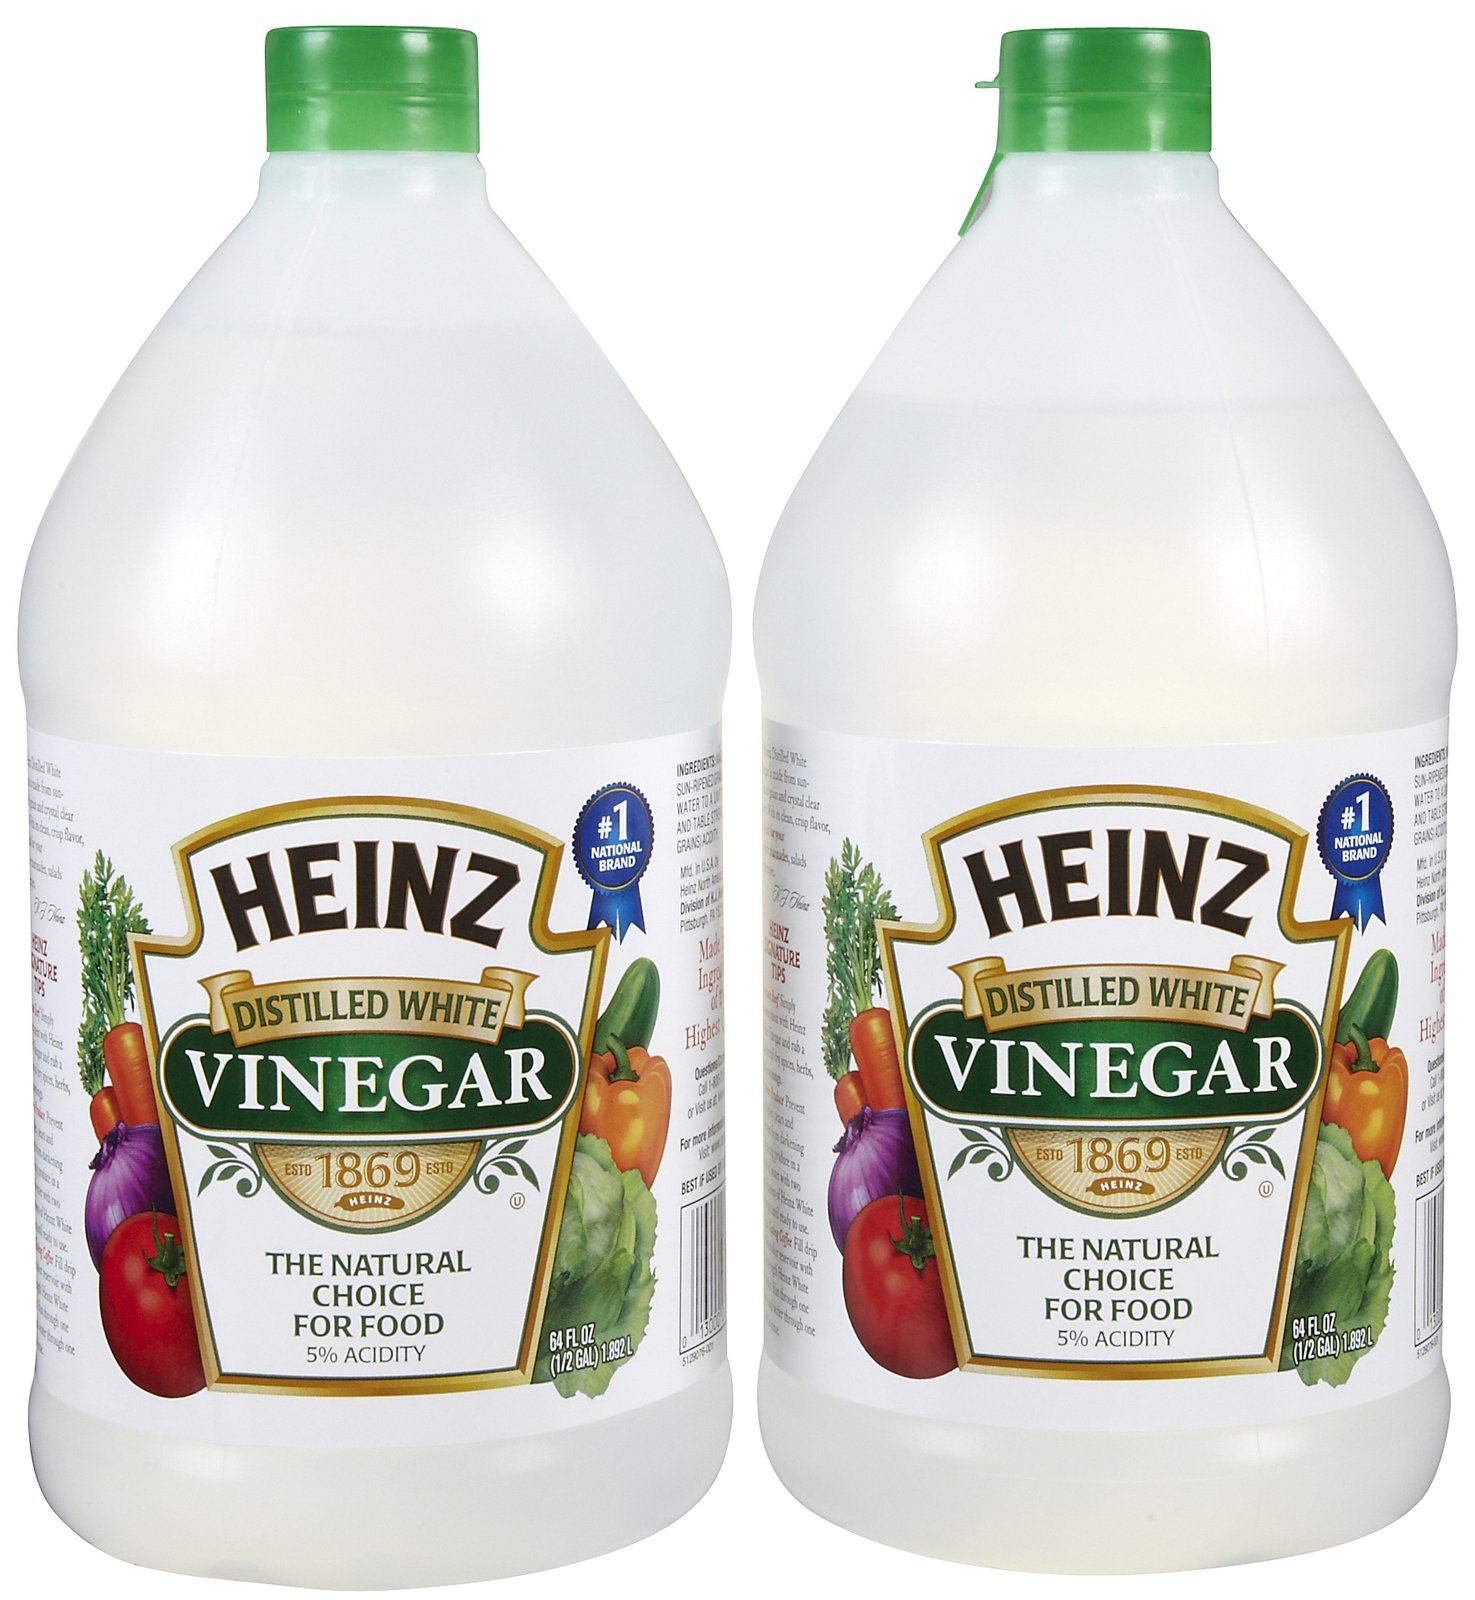 Ten Amazing & Unexpected Uses of Vinegar